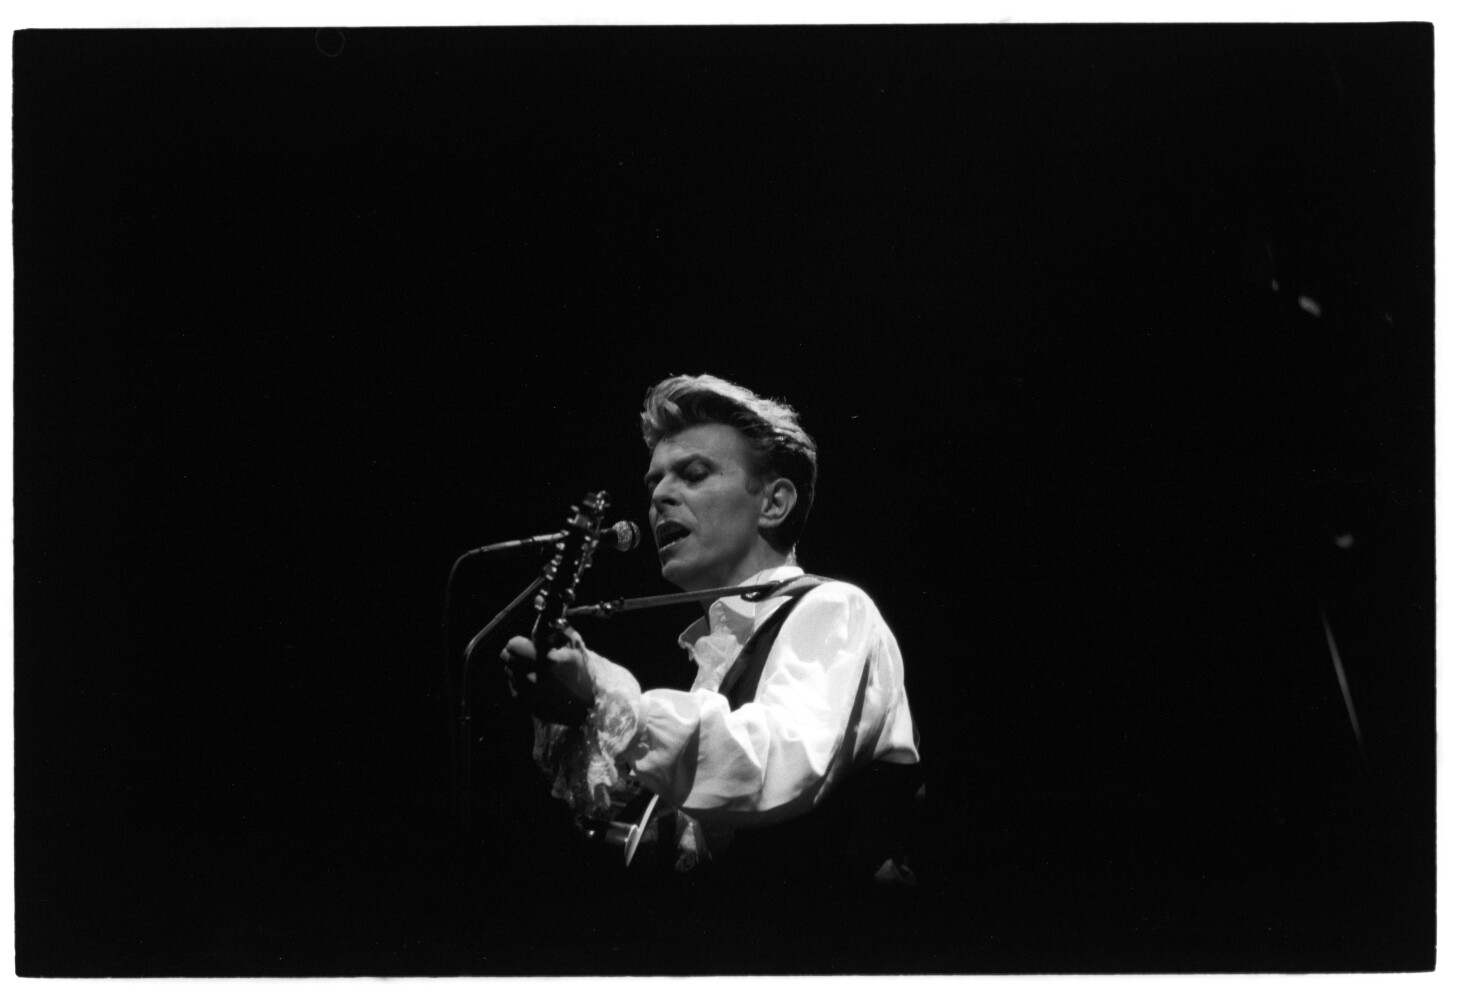 David Bowie 31.8.1990 I N1 (Rita Maier / Schwules Museum Berlin RR-P)